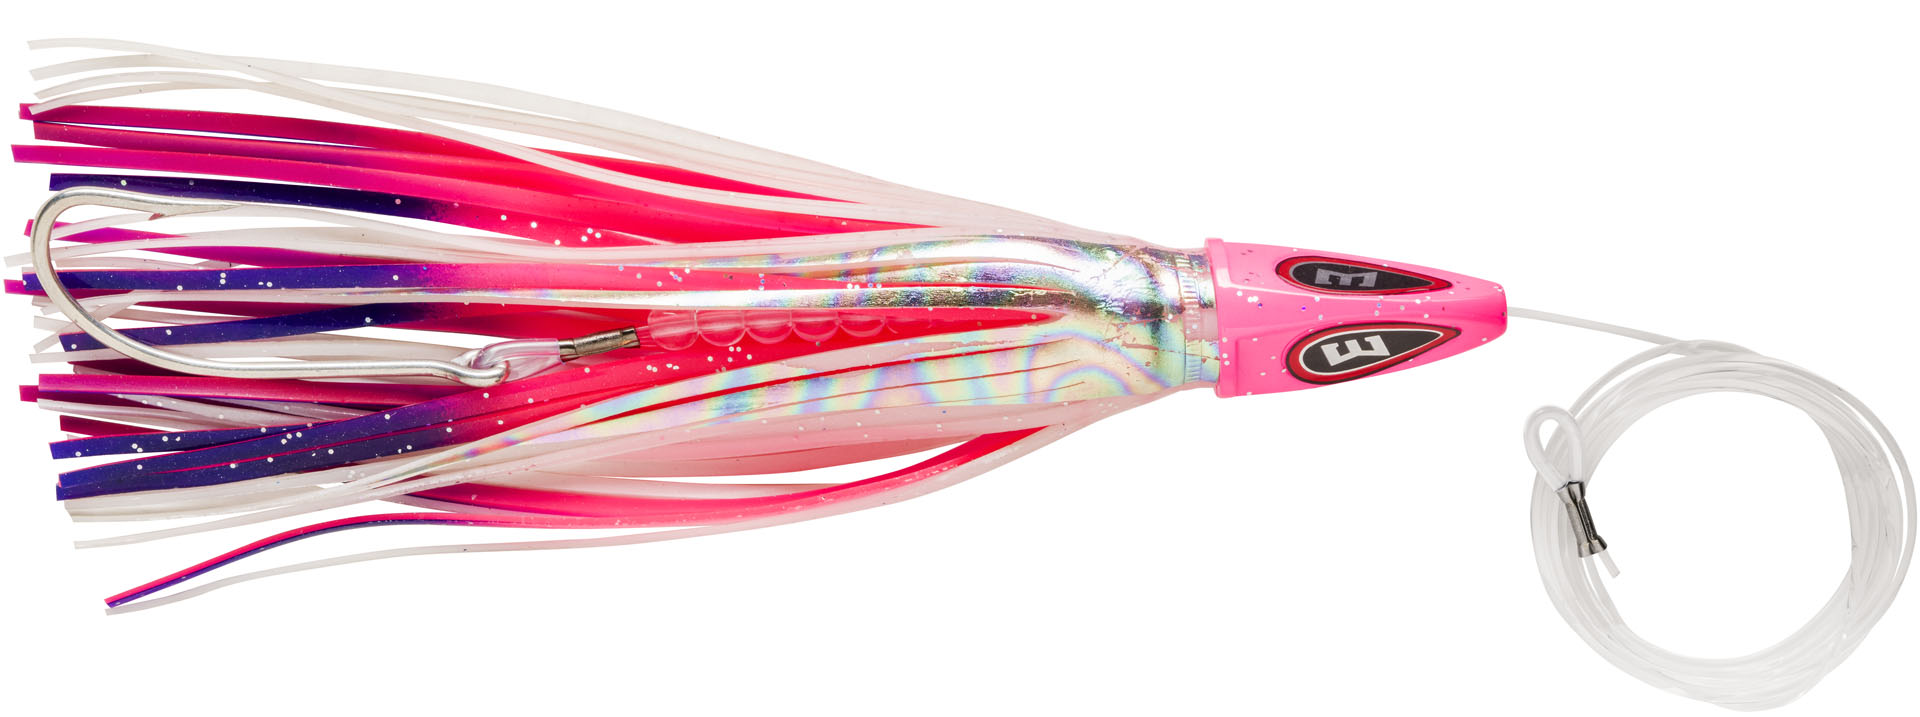 Williamson Hspeed Tuna Catcher Meeres Rig 19cm (99g) - Candy floss